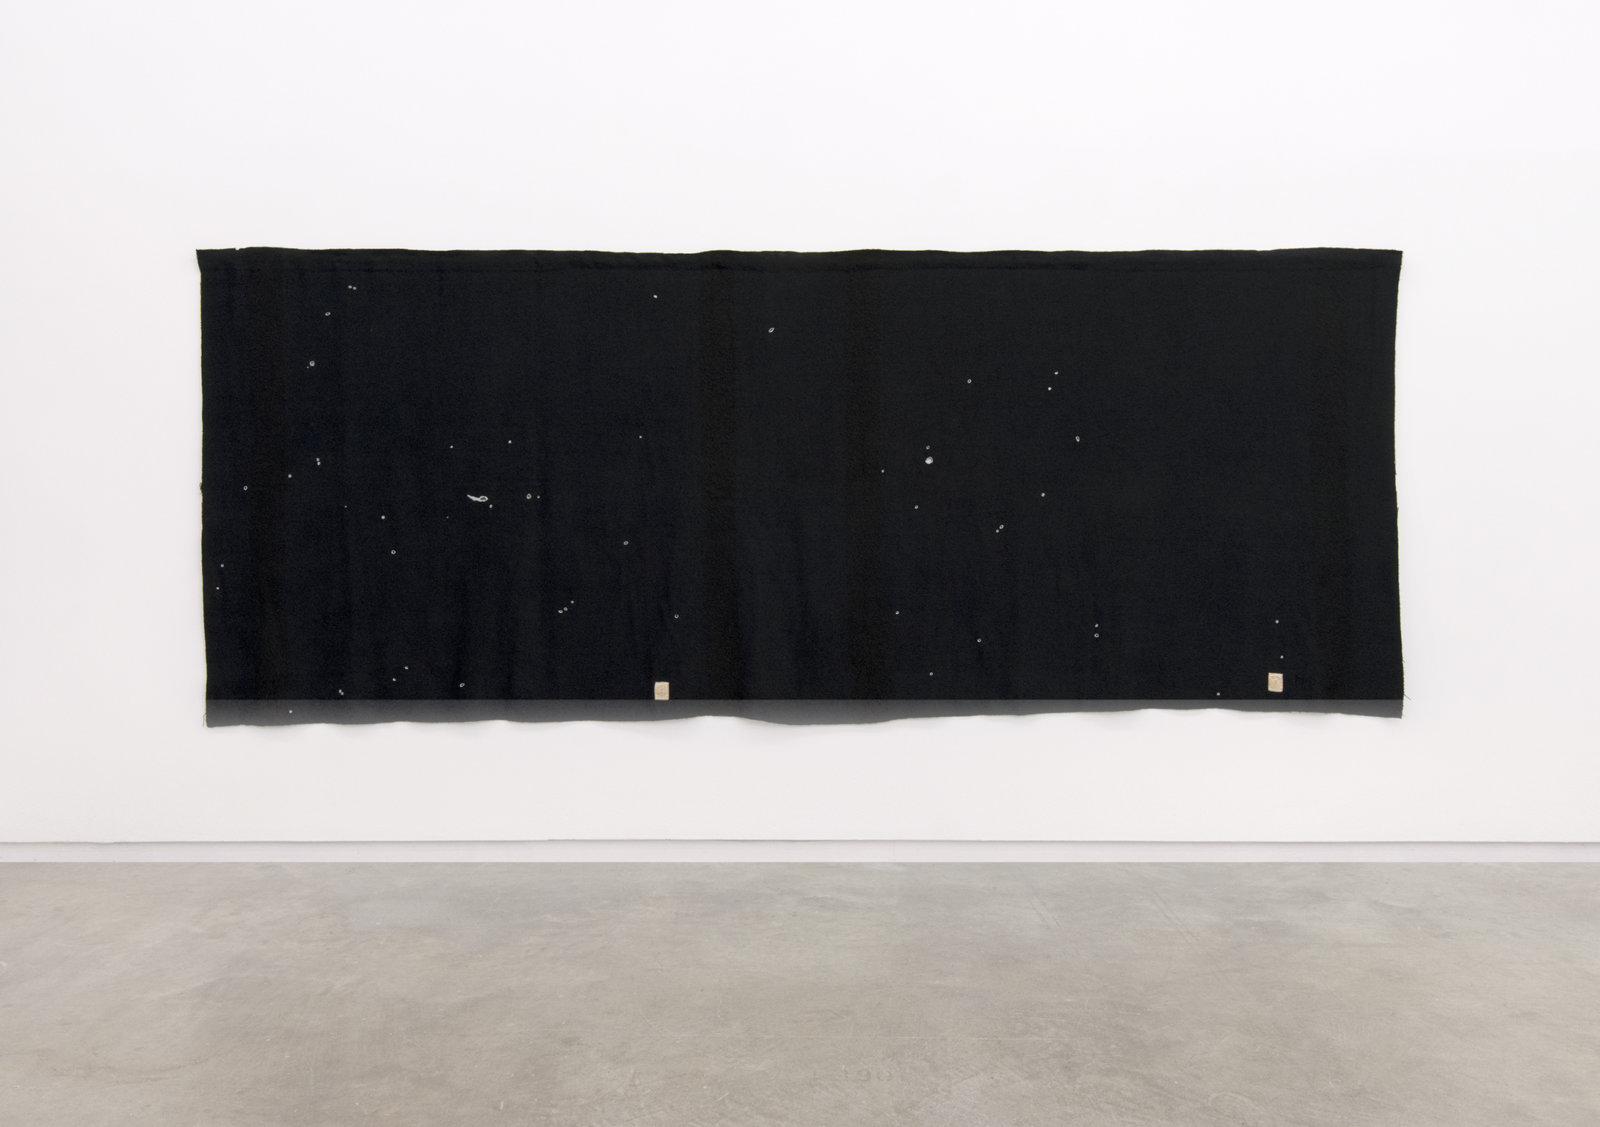 Liz Magor, Hudson’s Bay Double, 2011, wool, fabric, metal, polymerized gypsum, wood, 64 x 157 in. (163 x 399 cm)